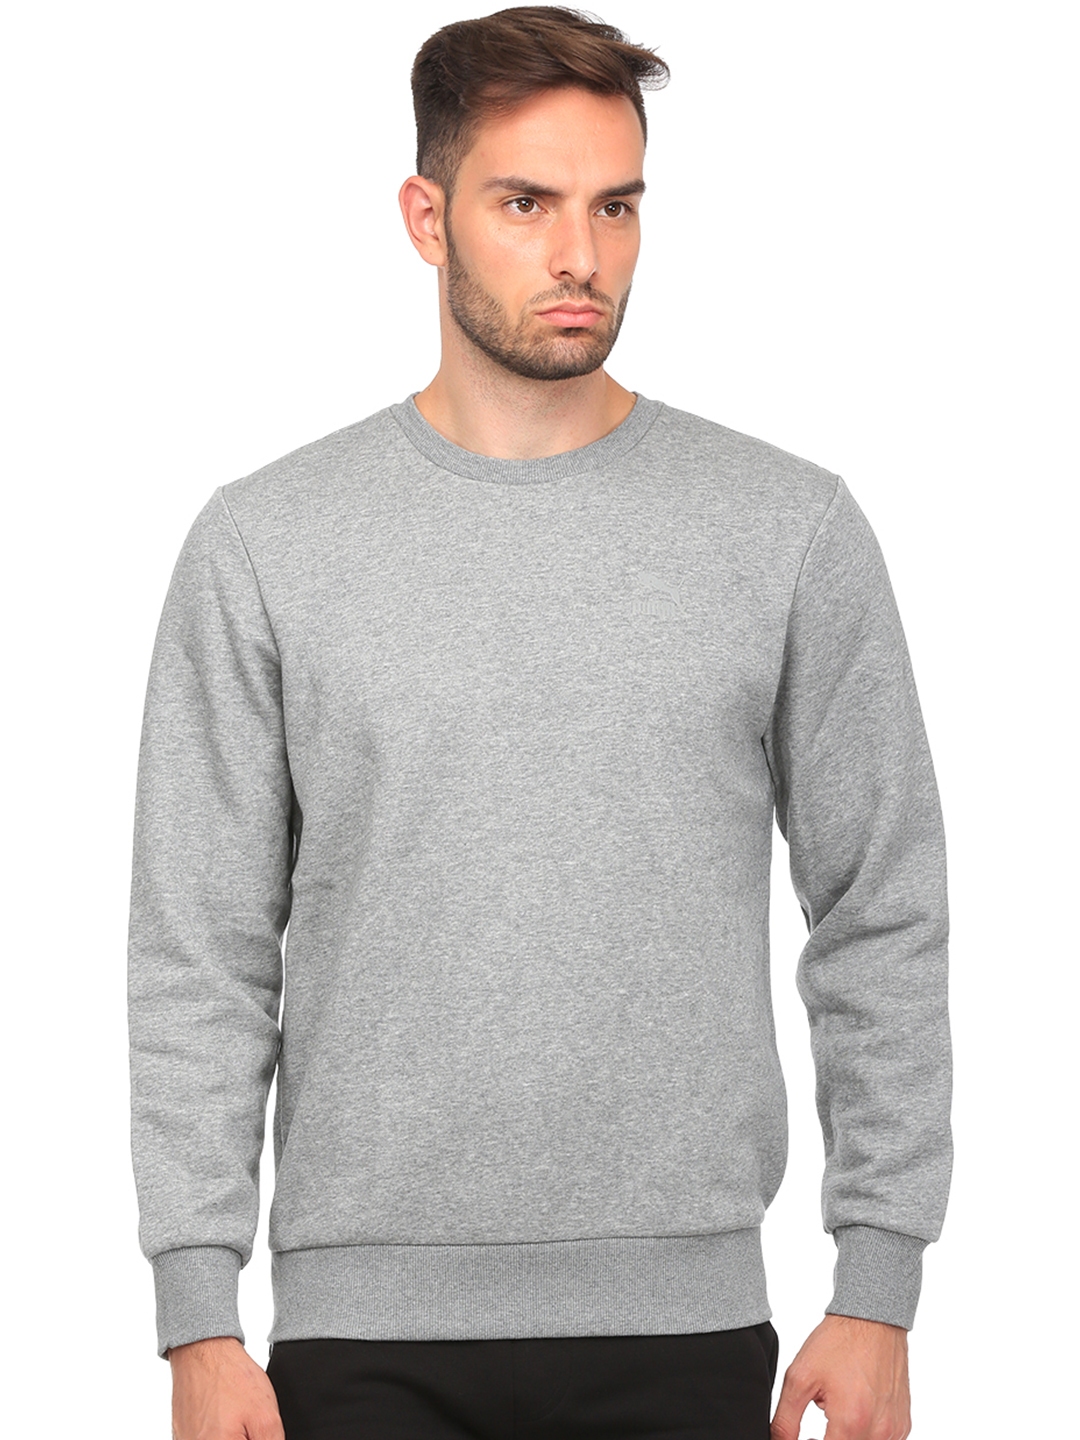 Buy Puma Men Grey Melange Evo Core Crew FL Solid Sweatshirt ...